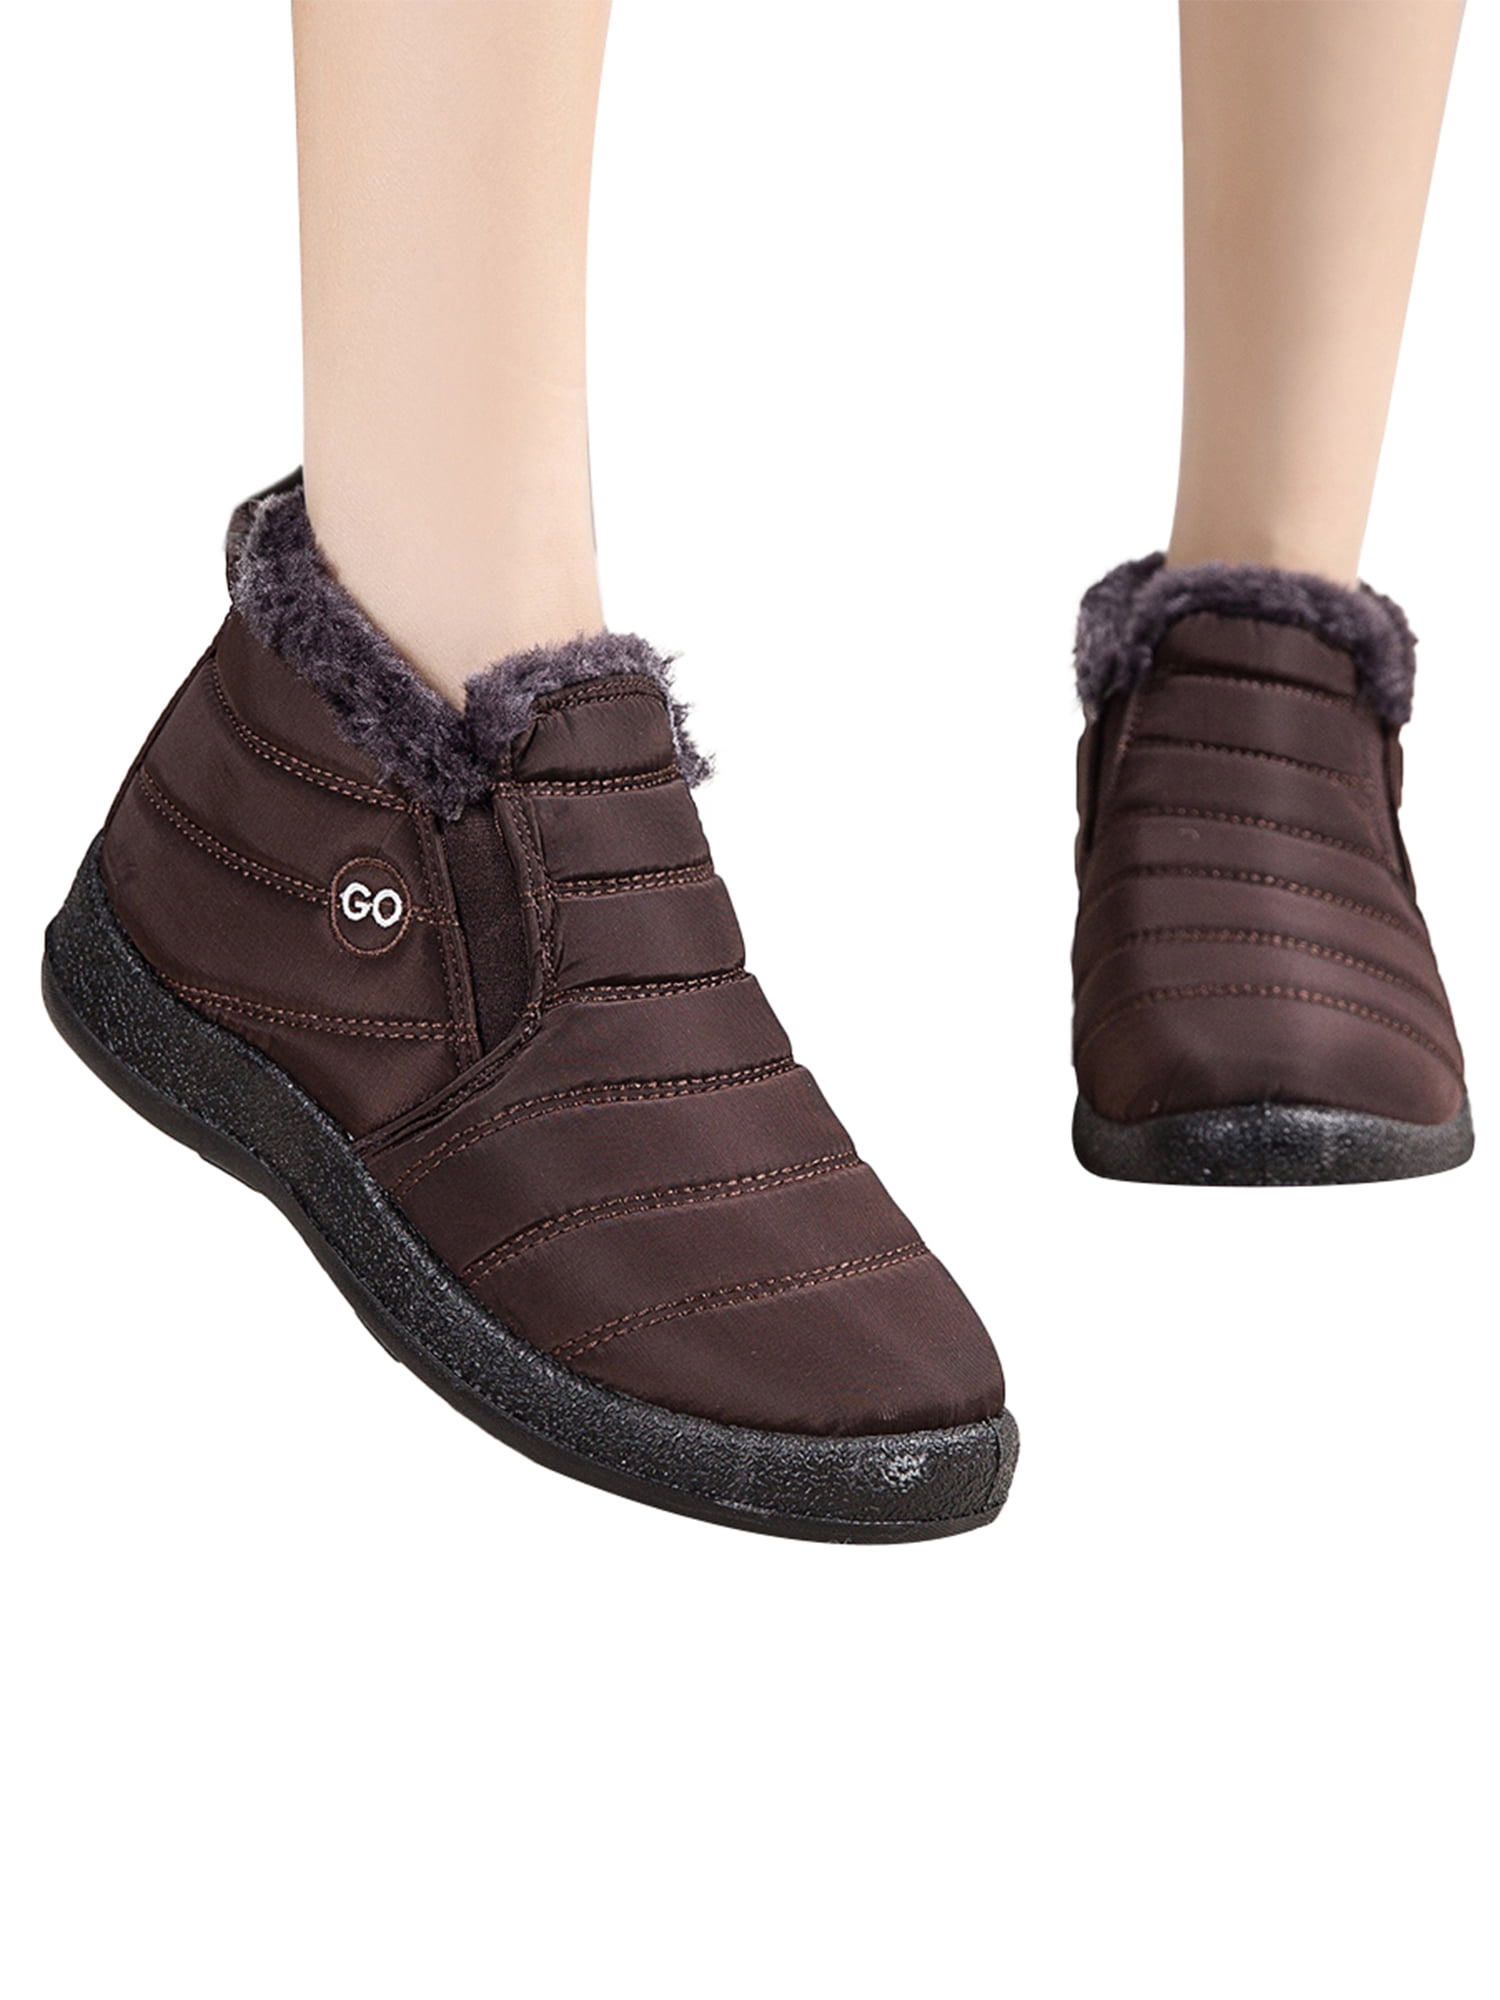 Women Winter Fur Lined Snow Boots Outdoor Shoes Ankle Slip on Waterproof Outdoor Booties High-Top Outdoor Winter Shoe 